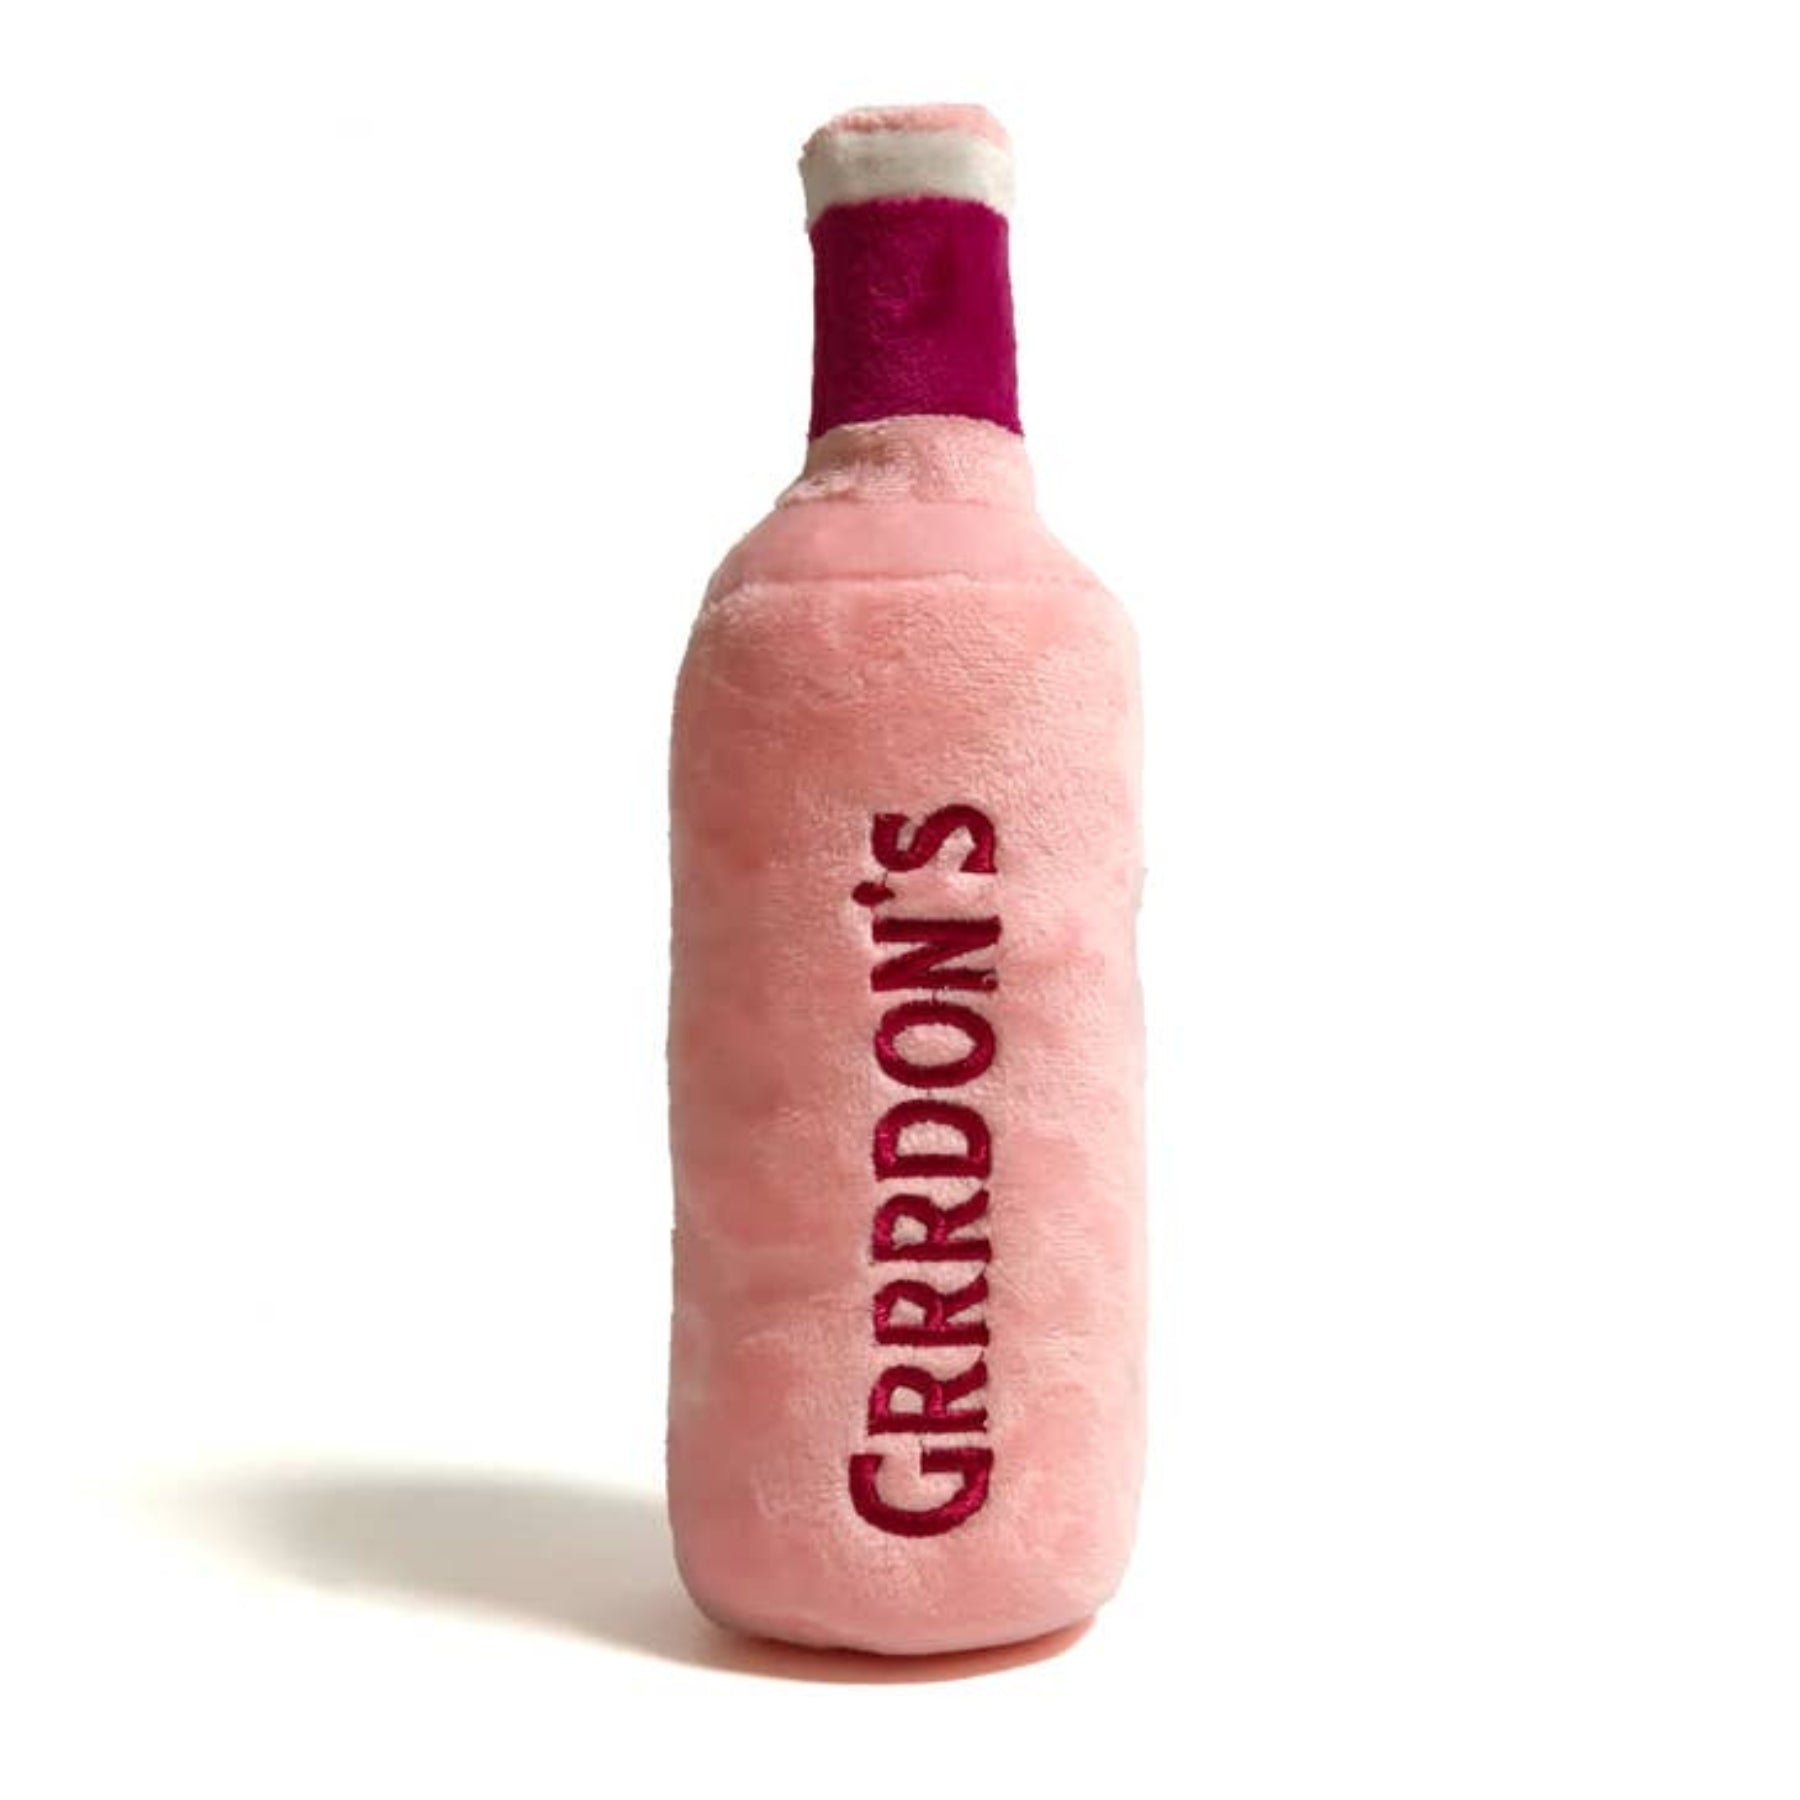 Grrrdon's Pink Gin Bottle Plush Dog Toy - Pooch Luxury